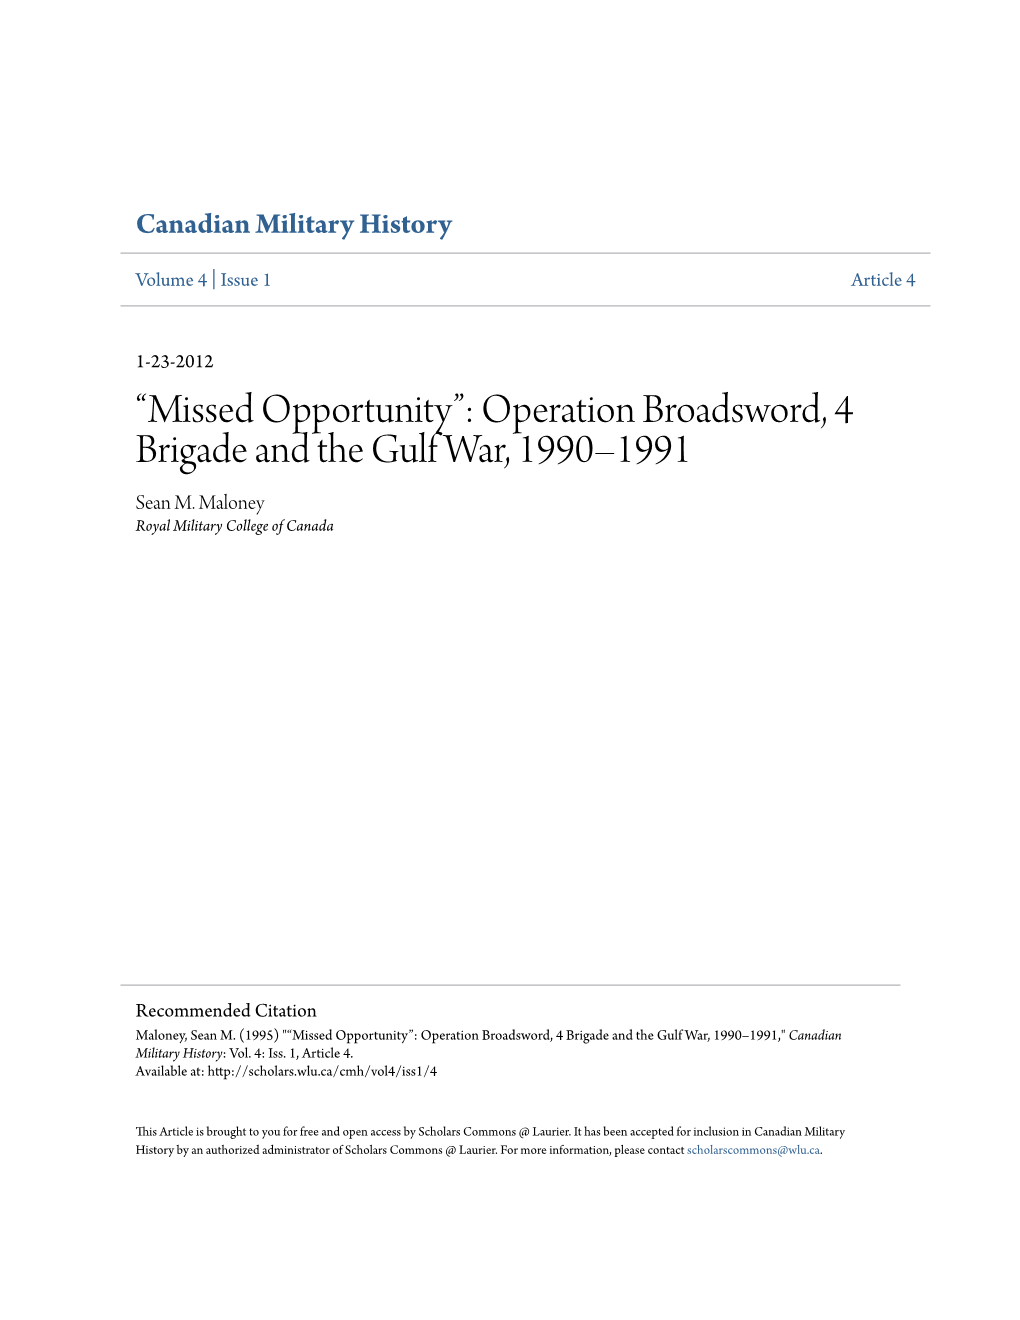 Operation Broadsword, 4 Brigade and the Gulf War, 1990Â•ﬁ1991